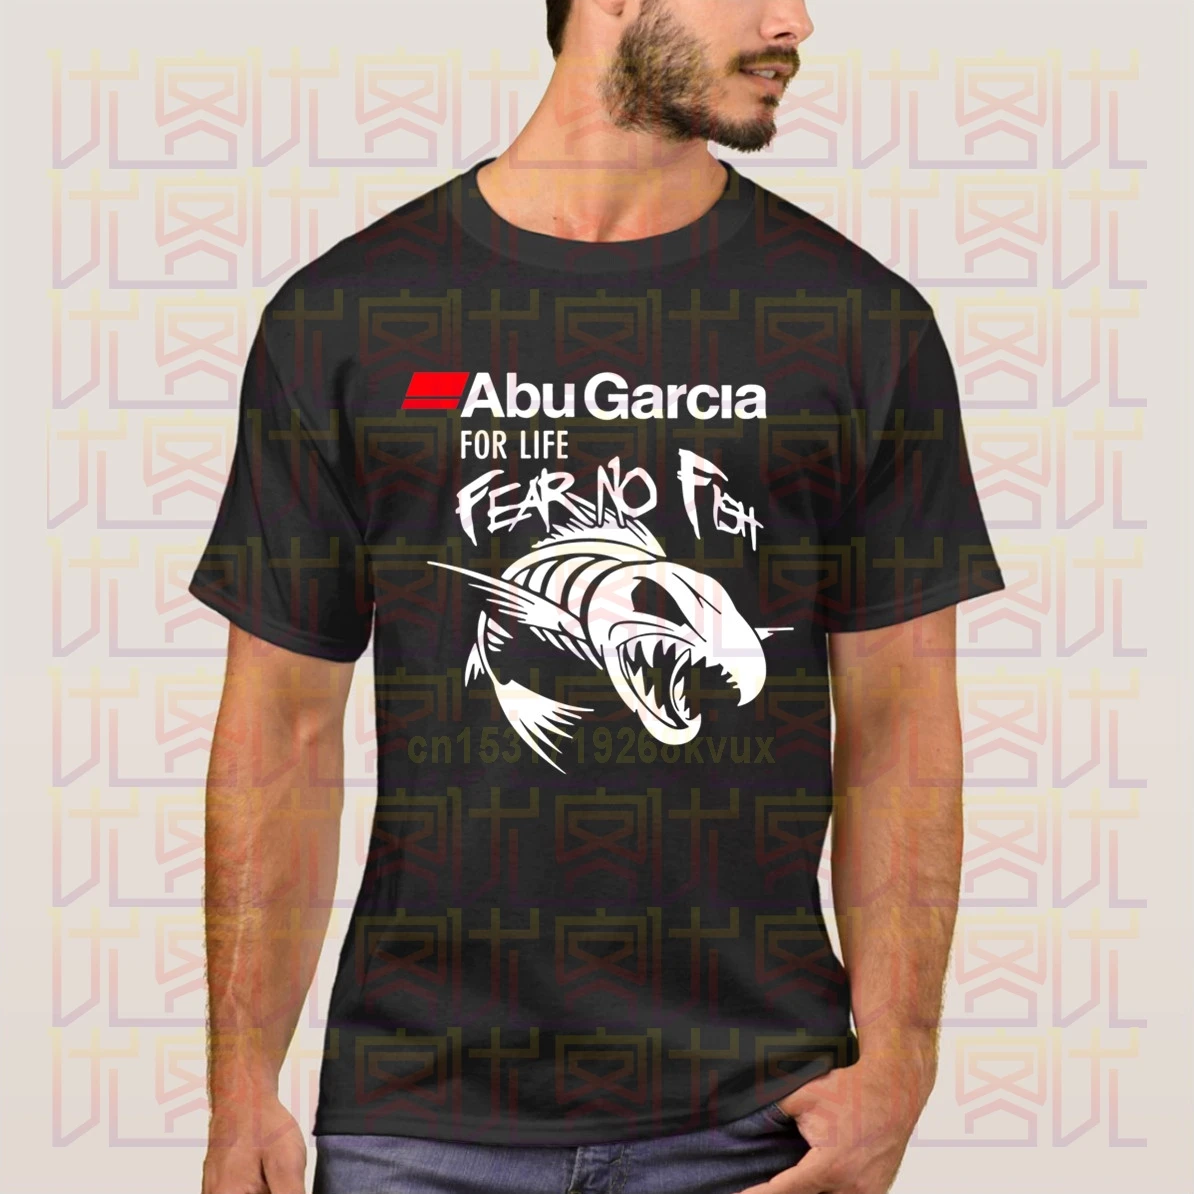 

Abu Garcia For Life Fear No Fish Classics T-Shirt 2020 Newest Summer Men's Short Sleeve Tees Shirt Tops Unisex Amazing Graphic